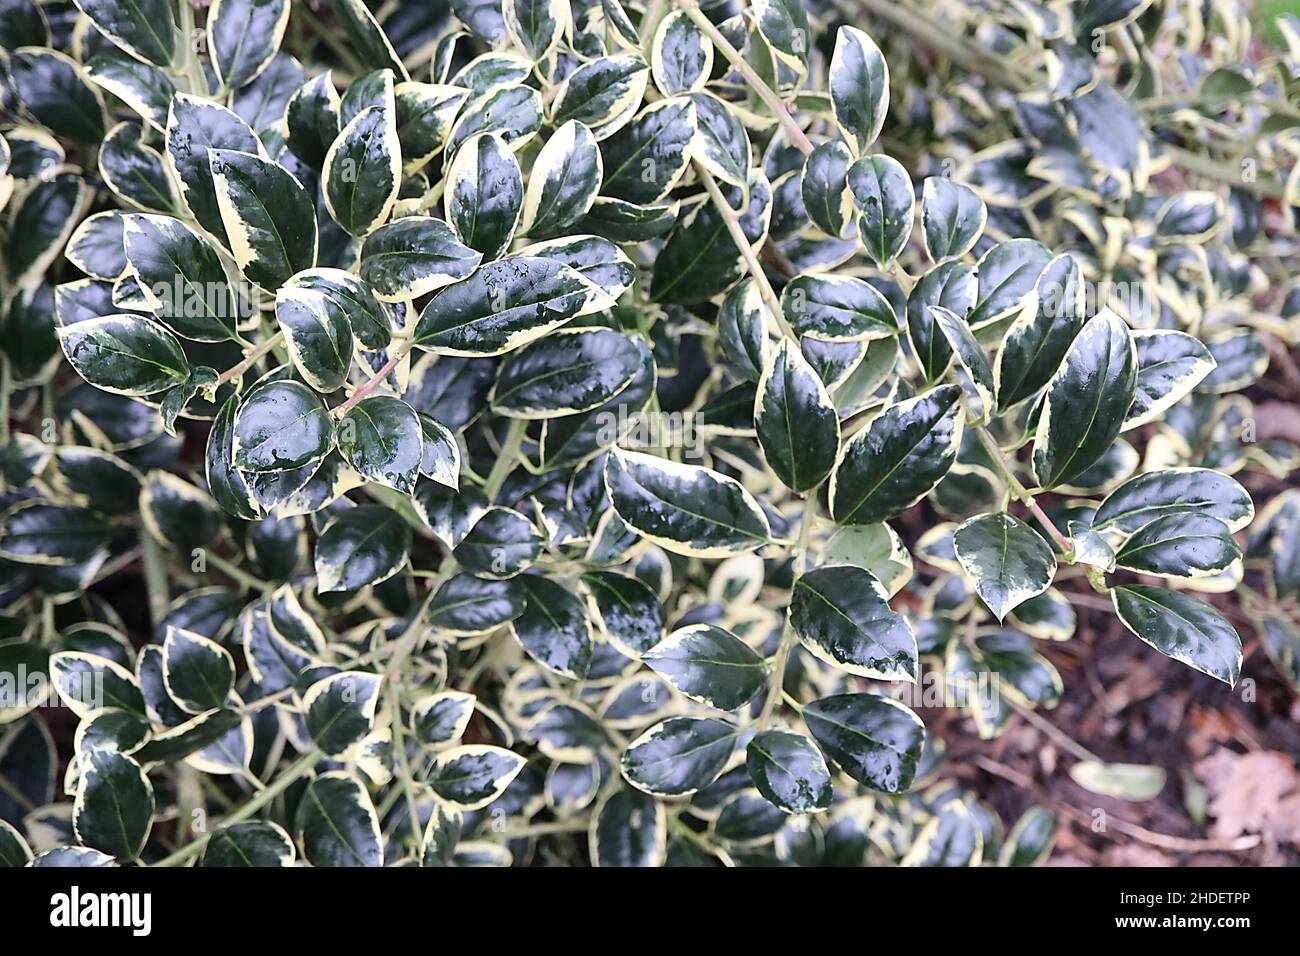 Ilex aquifolium ‘Silver Van Tol’ holly Silver Van Tol – downcurved dark green leaves with pale cream margins,  January, England, UK Stock Photo